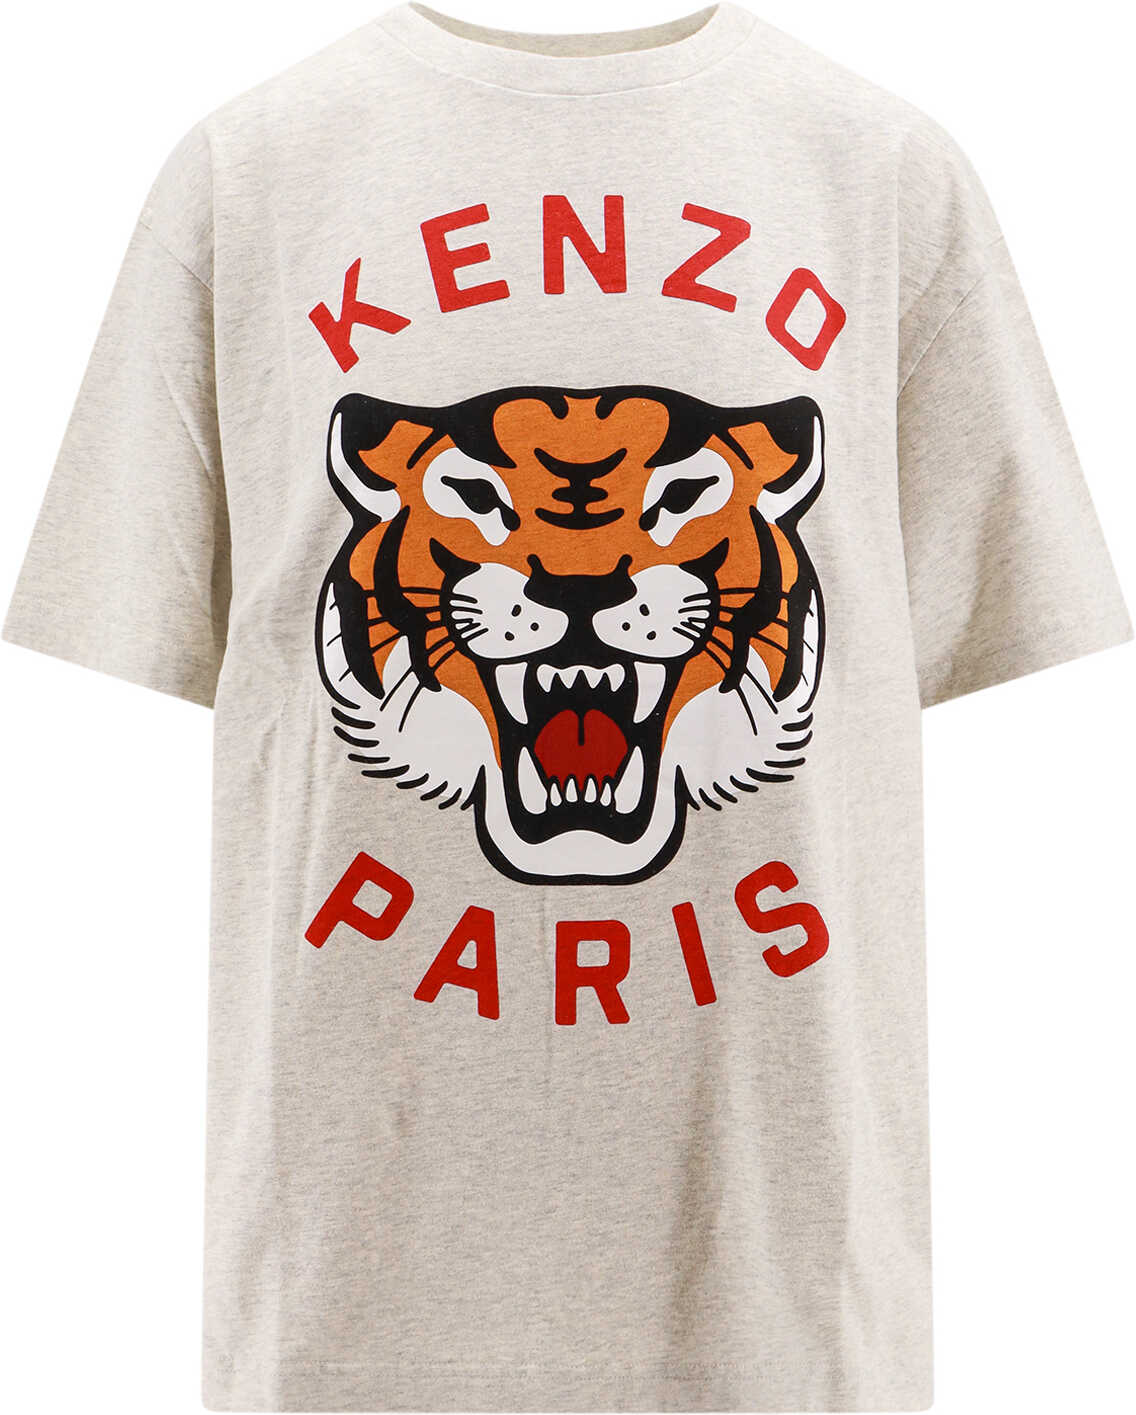 Poze KENZO PARIS T-Shirt Grey b-mall.ro 